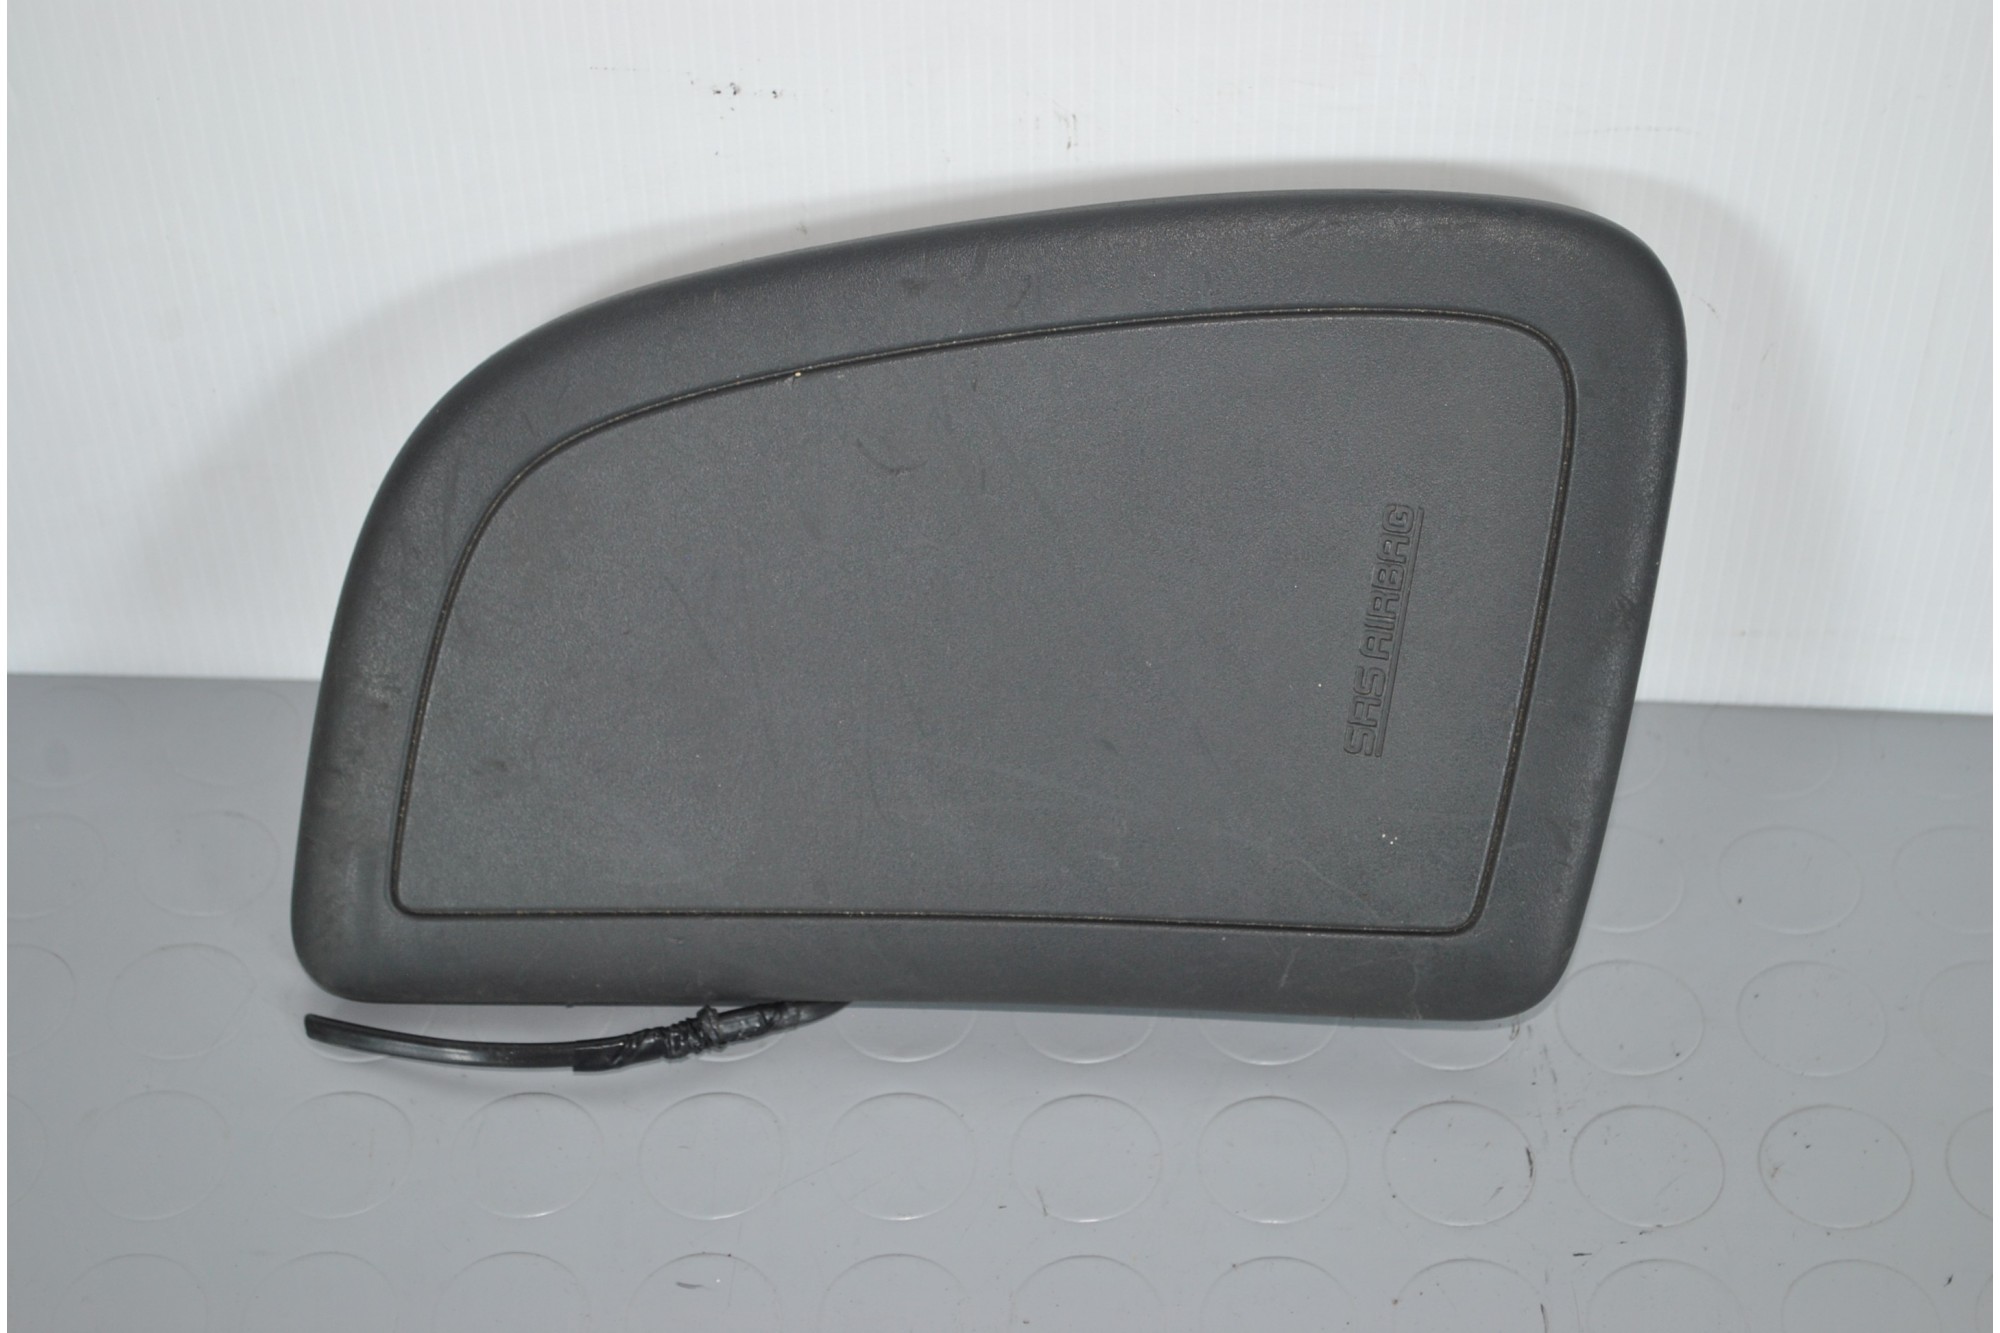 Airbag Sedile DX Suzuki Splash dal 2008 al 2015 Cod 85350-51k  1626169154164